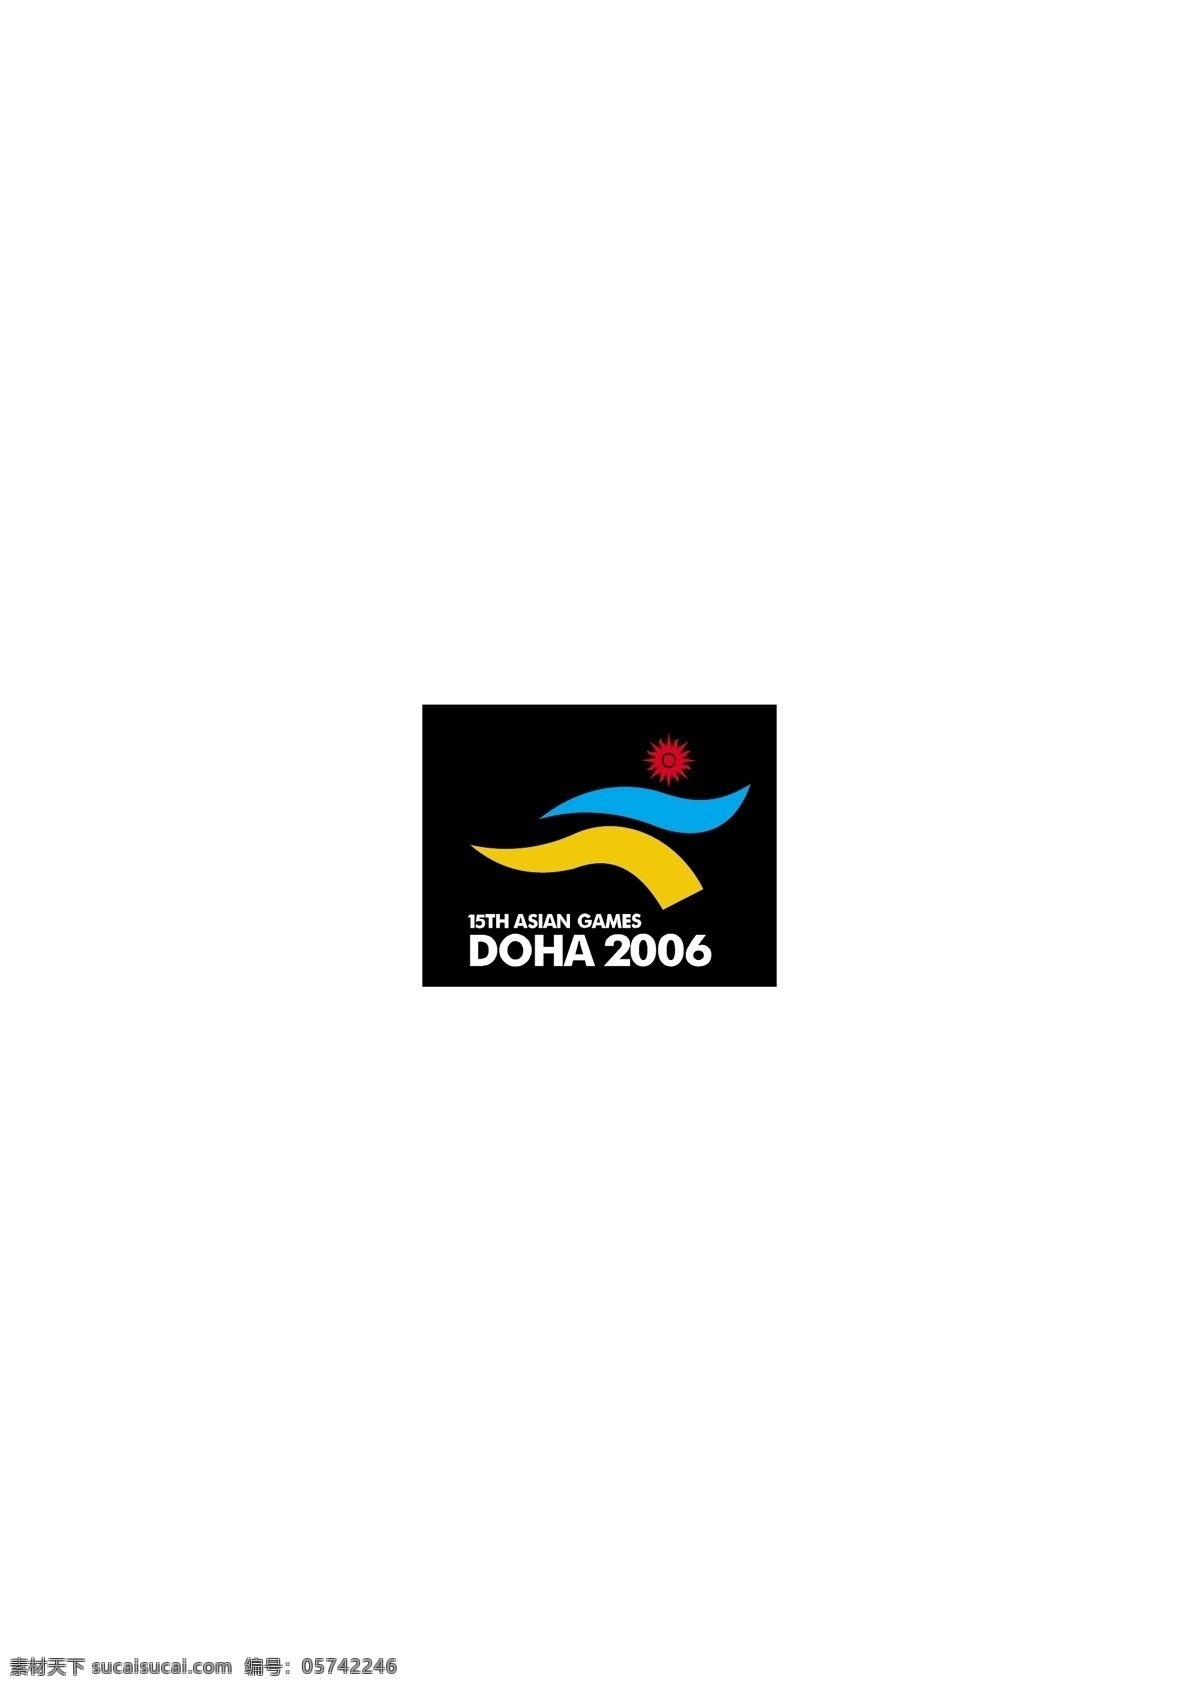 logo大全 logo 设计欣赏 商业矢量 矢量下载 doha2006 doha 2006 运动 赛事 标志设计 欣赏 网页矢量 矢量图 其他矢量图